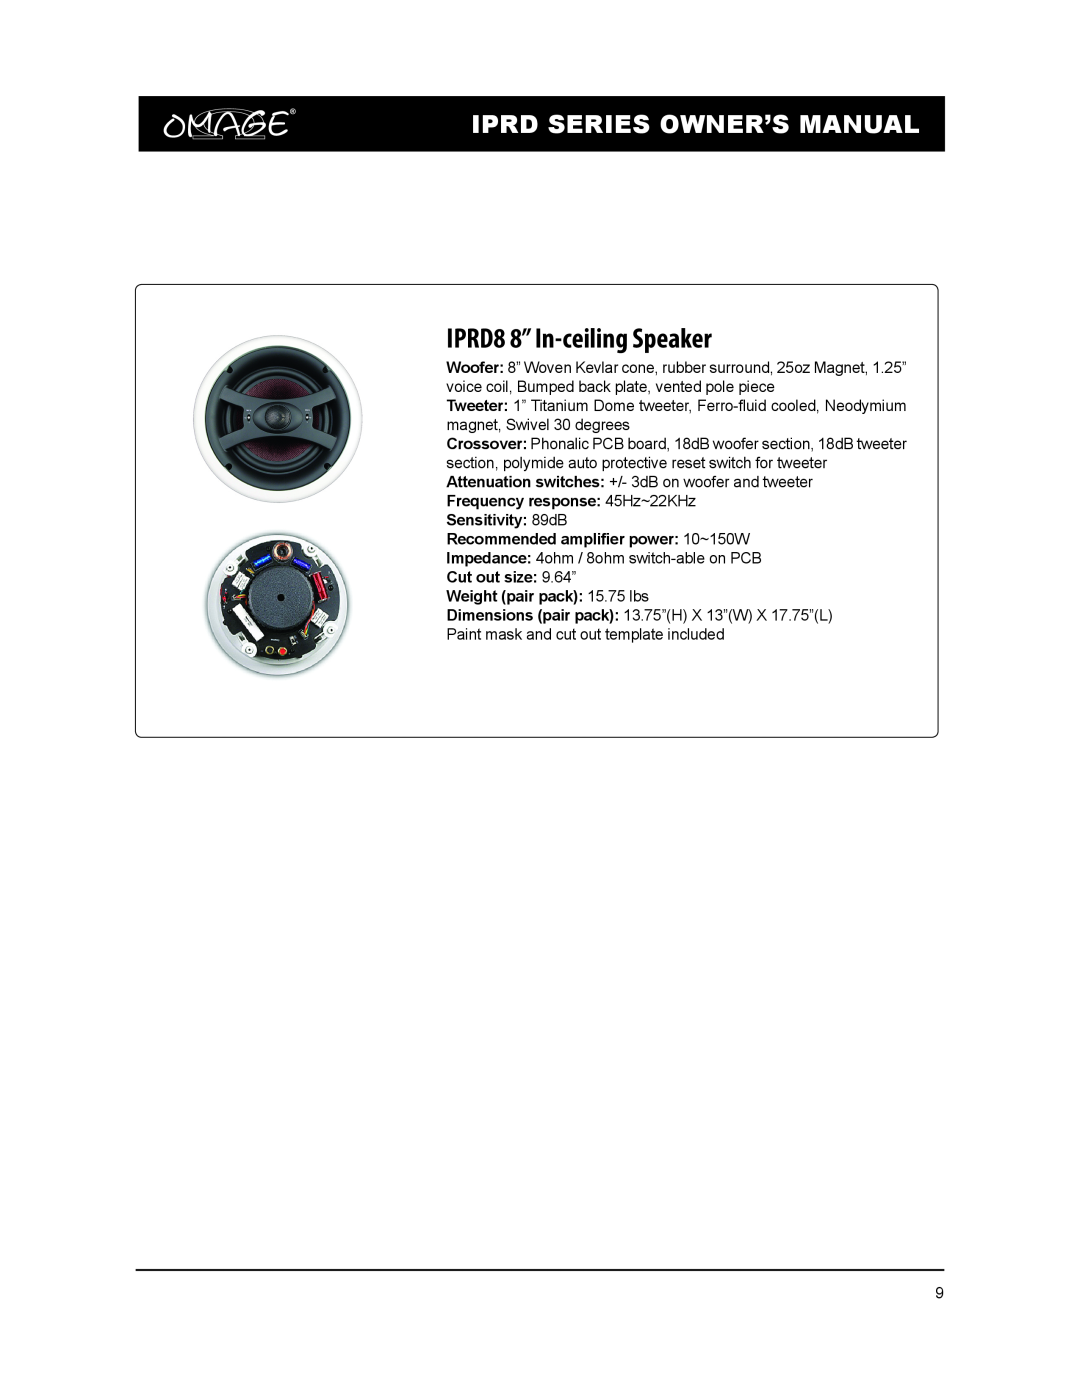 Omage owner manual IPRD8 8” In-ceilingSpeaker, Sensitivity 89dB, Recommended ampliﬁer power 10~150W 